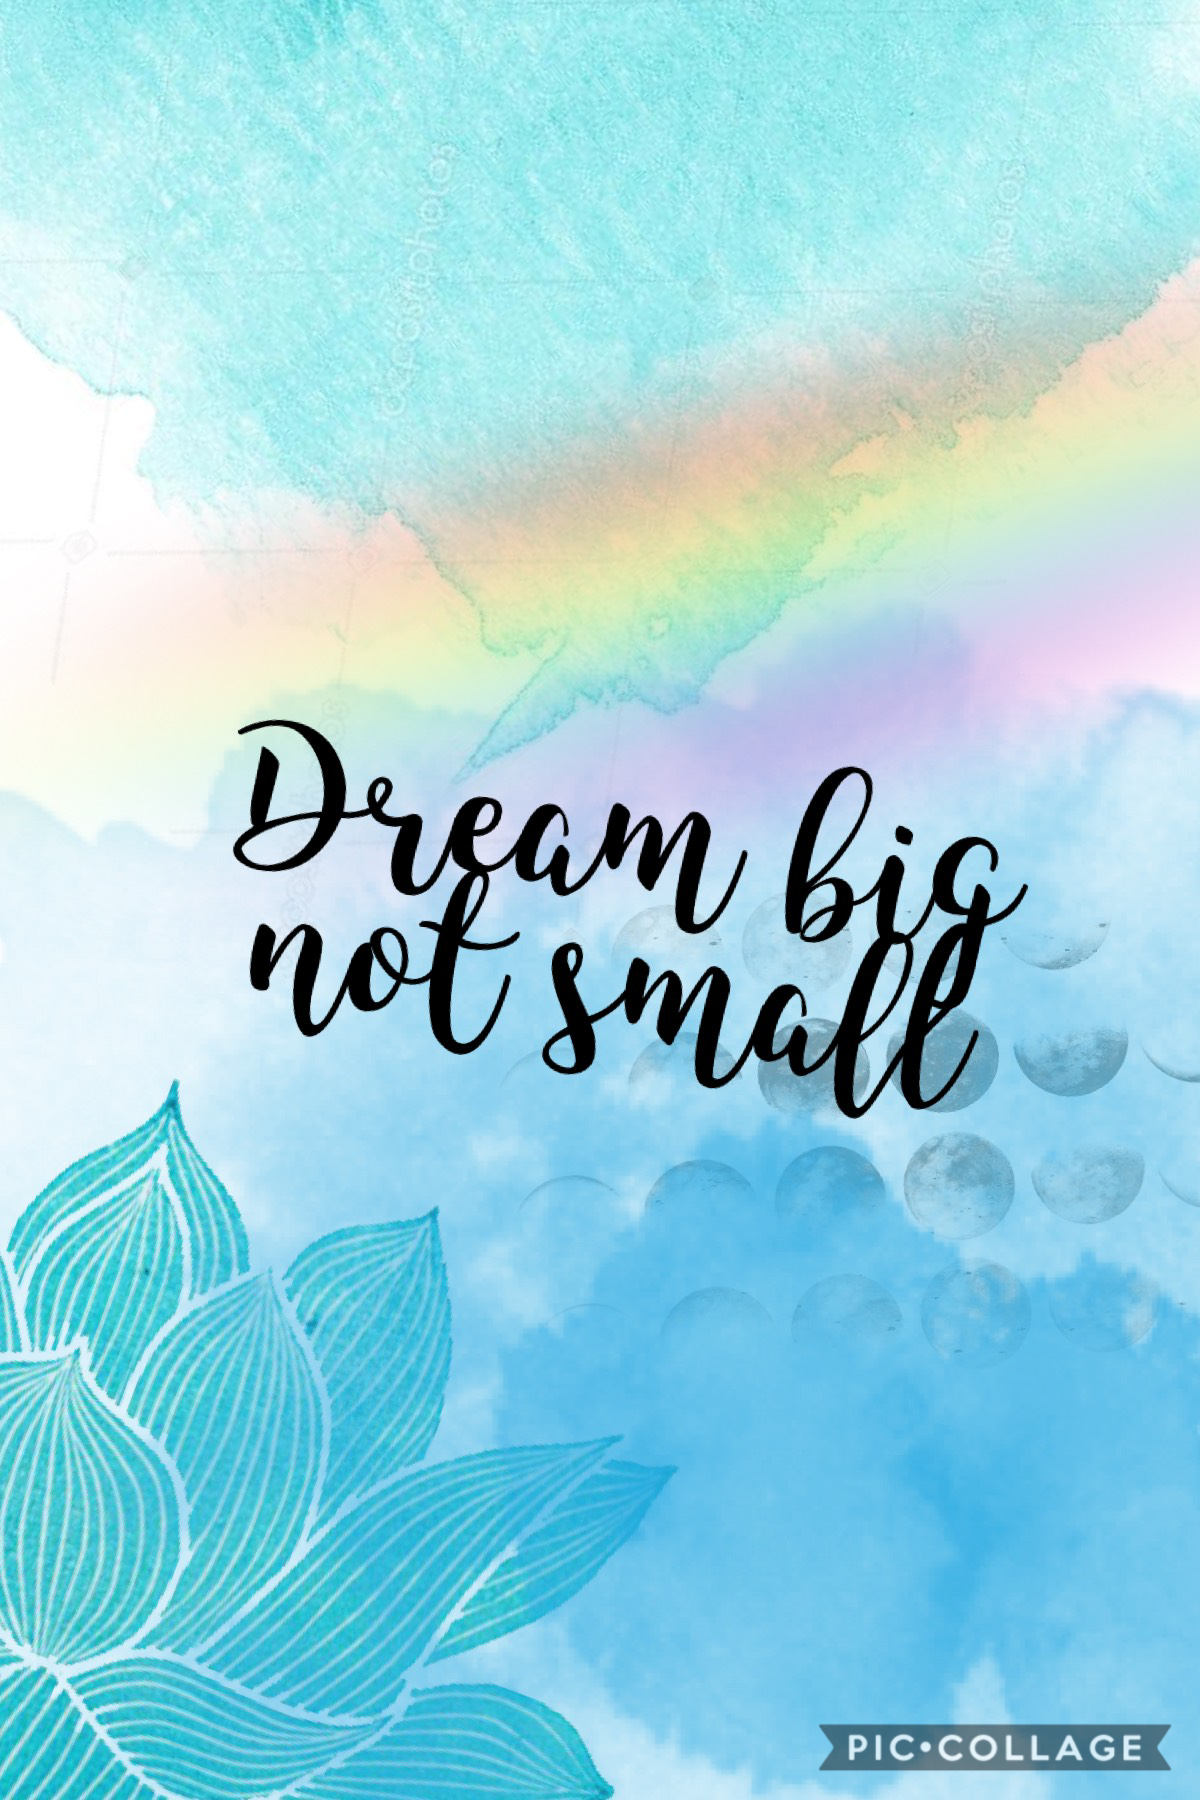 Dream big not small